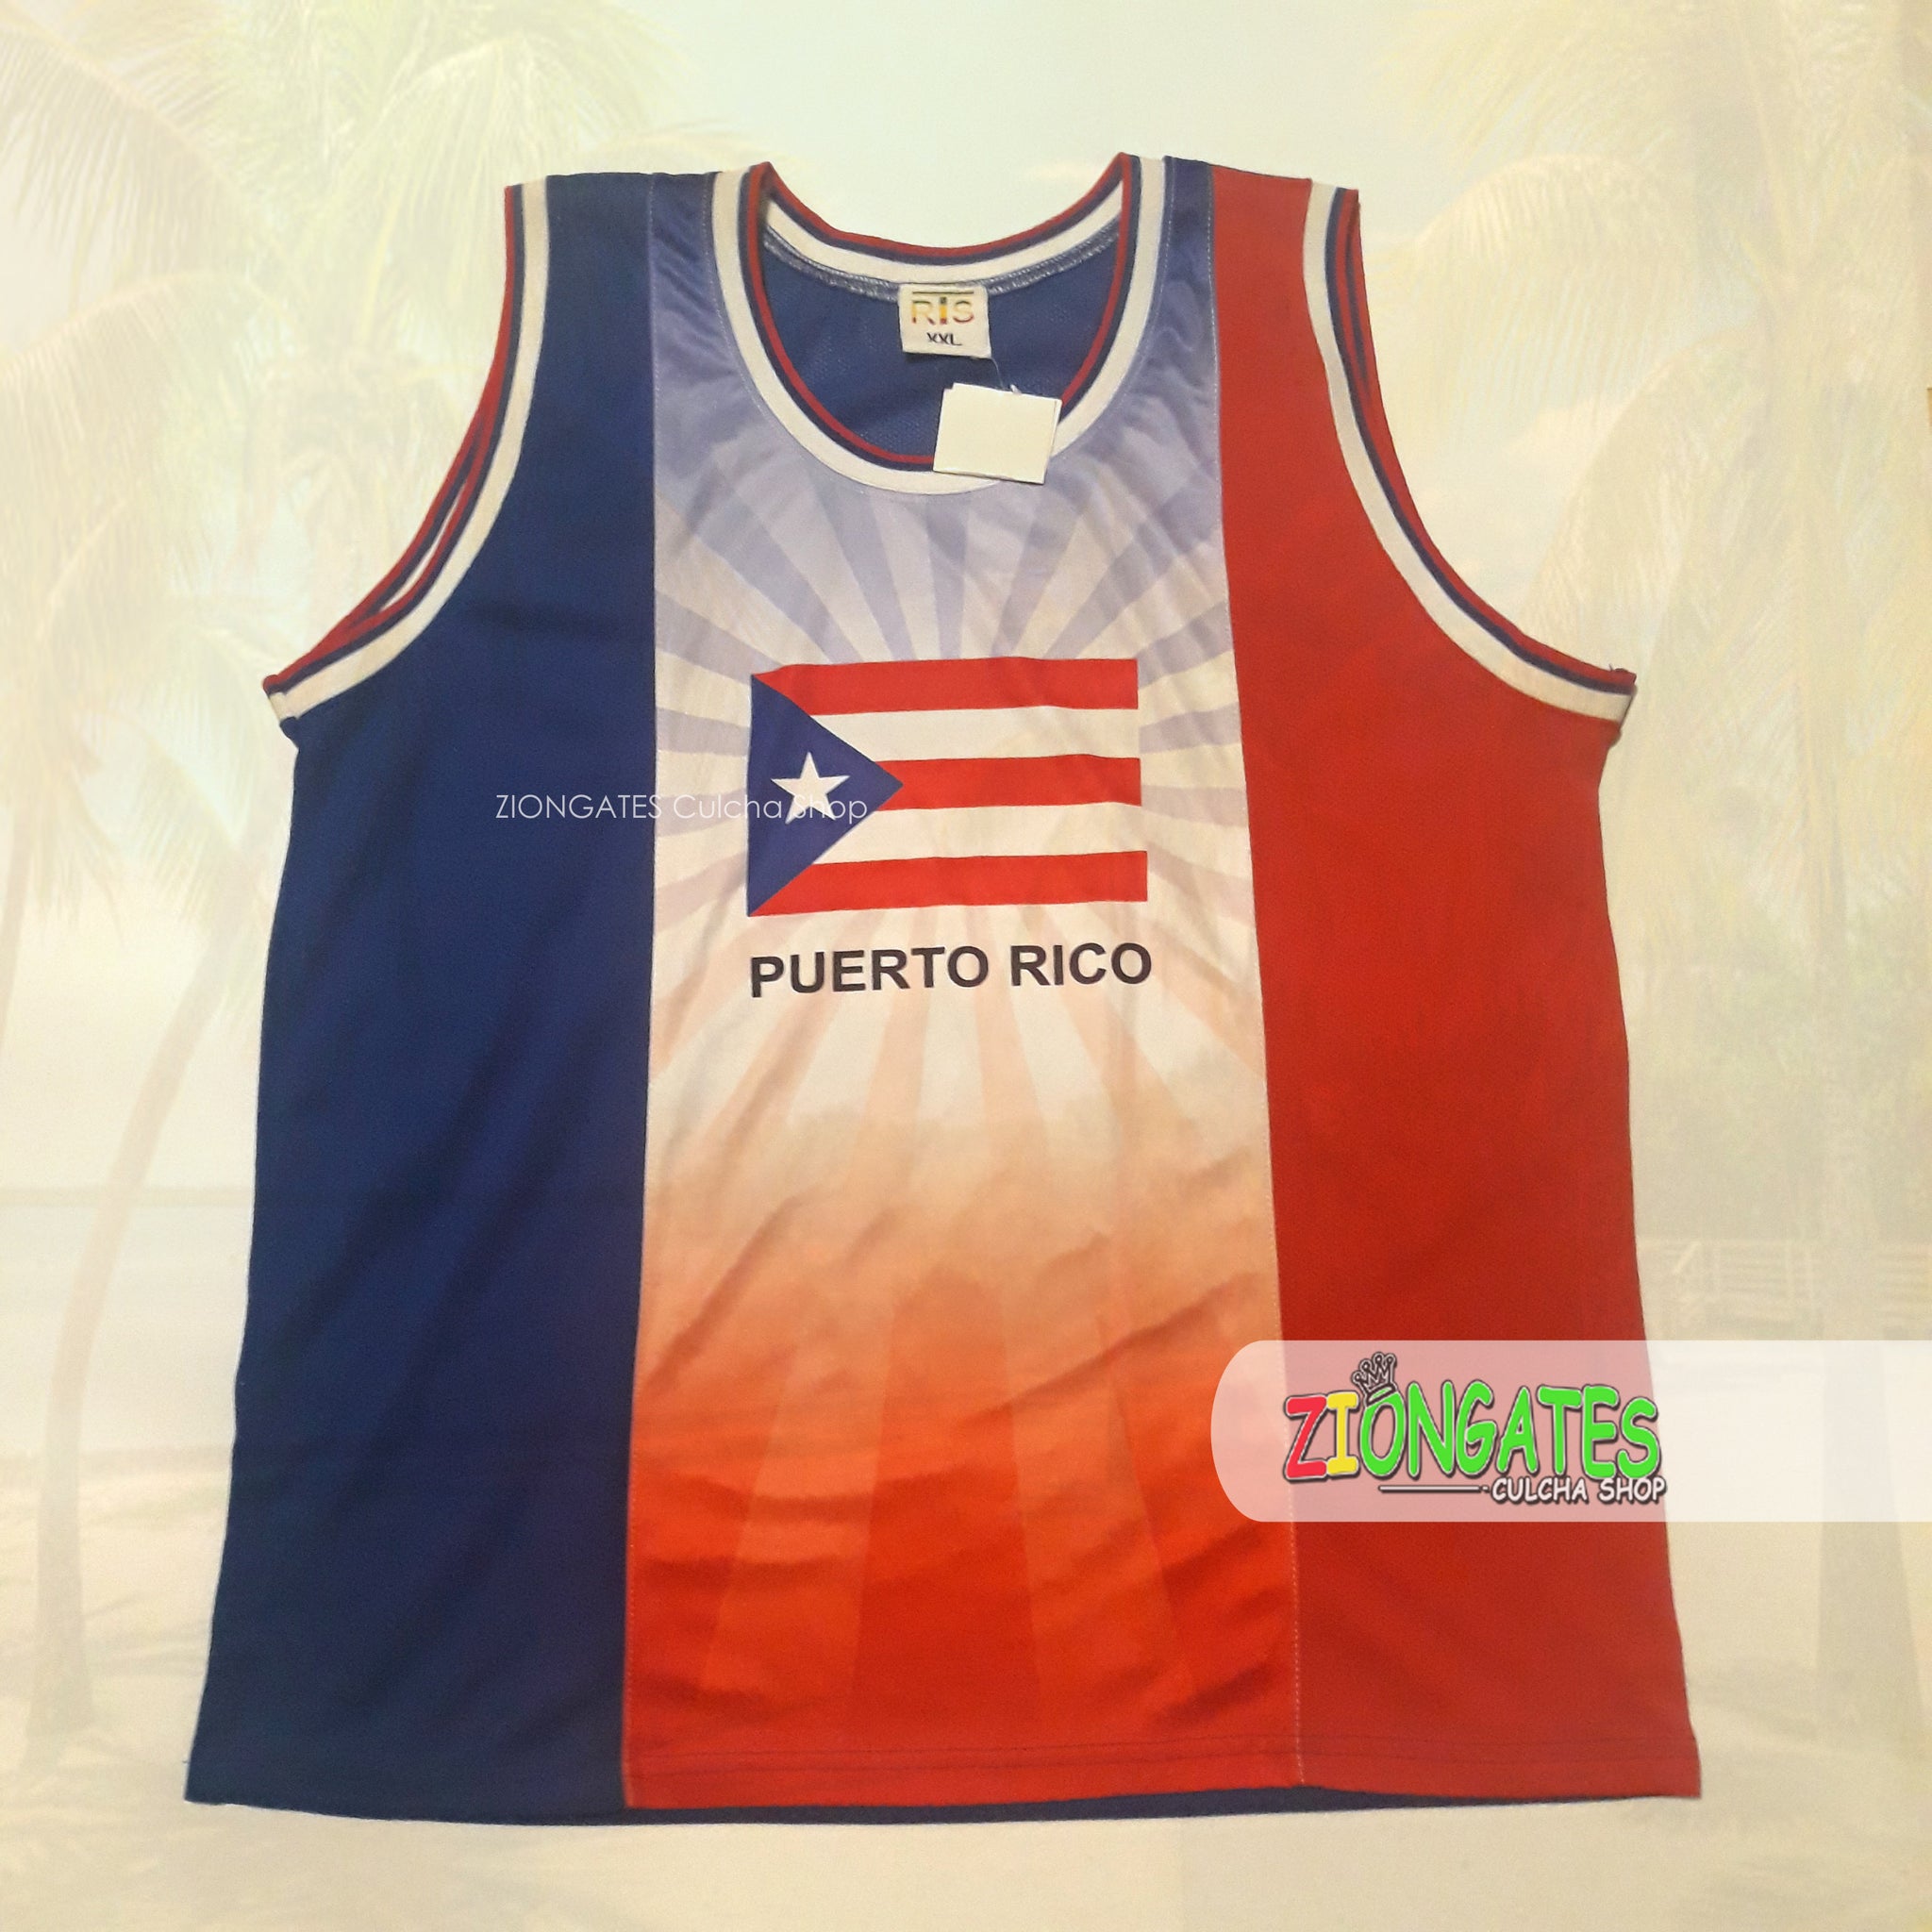 Puerto Rico jersey